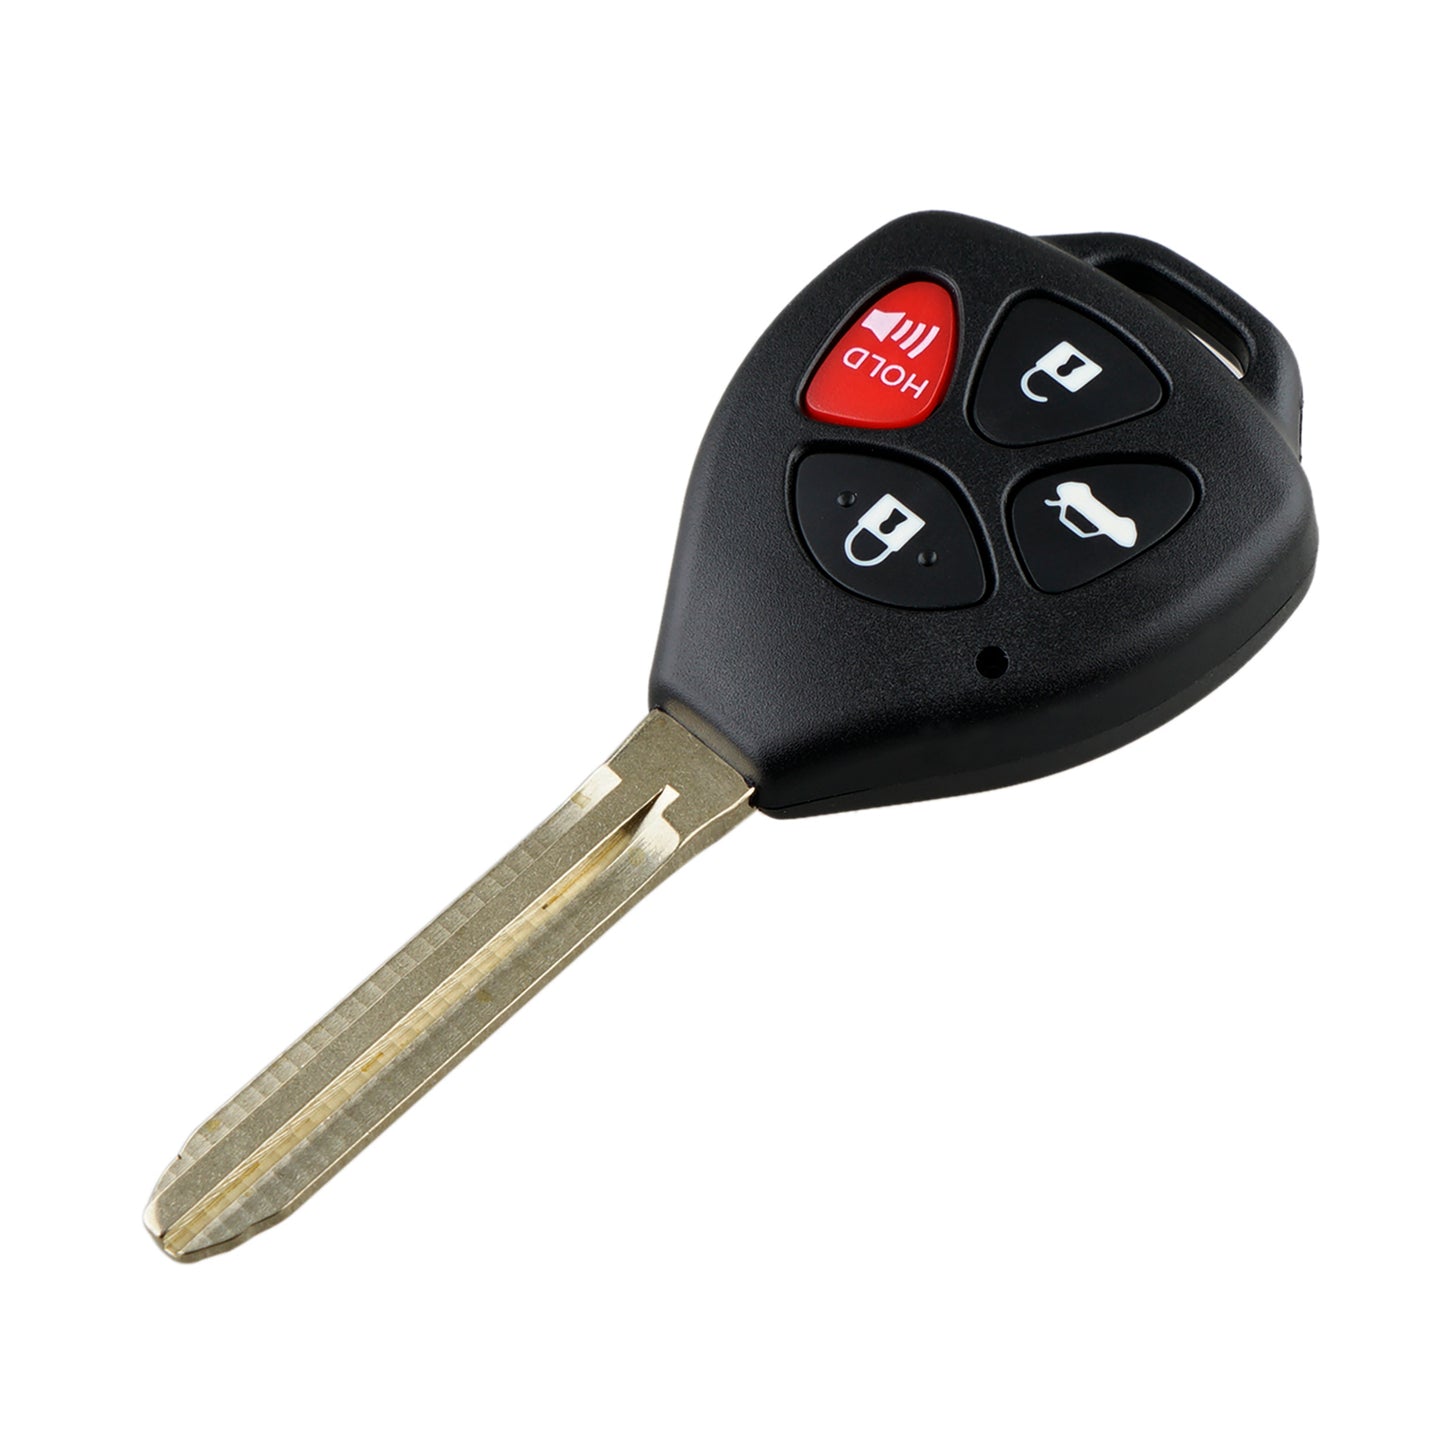 4 Buttons 314MHz Keyless Entry Fob Remote Car Key For 2008 - 2014 Toyota Venza Corolla Avalon Matrix Pontiac Vibe FCC ID: GQ4-29T SKU : J213